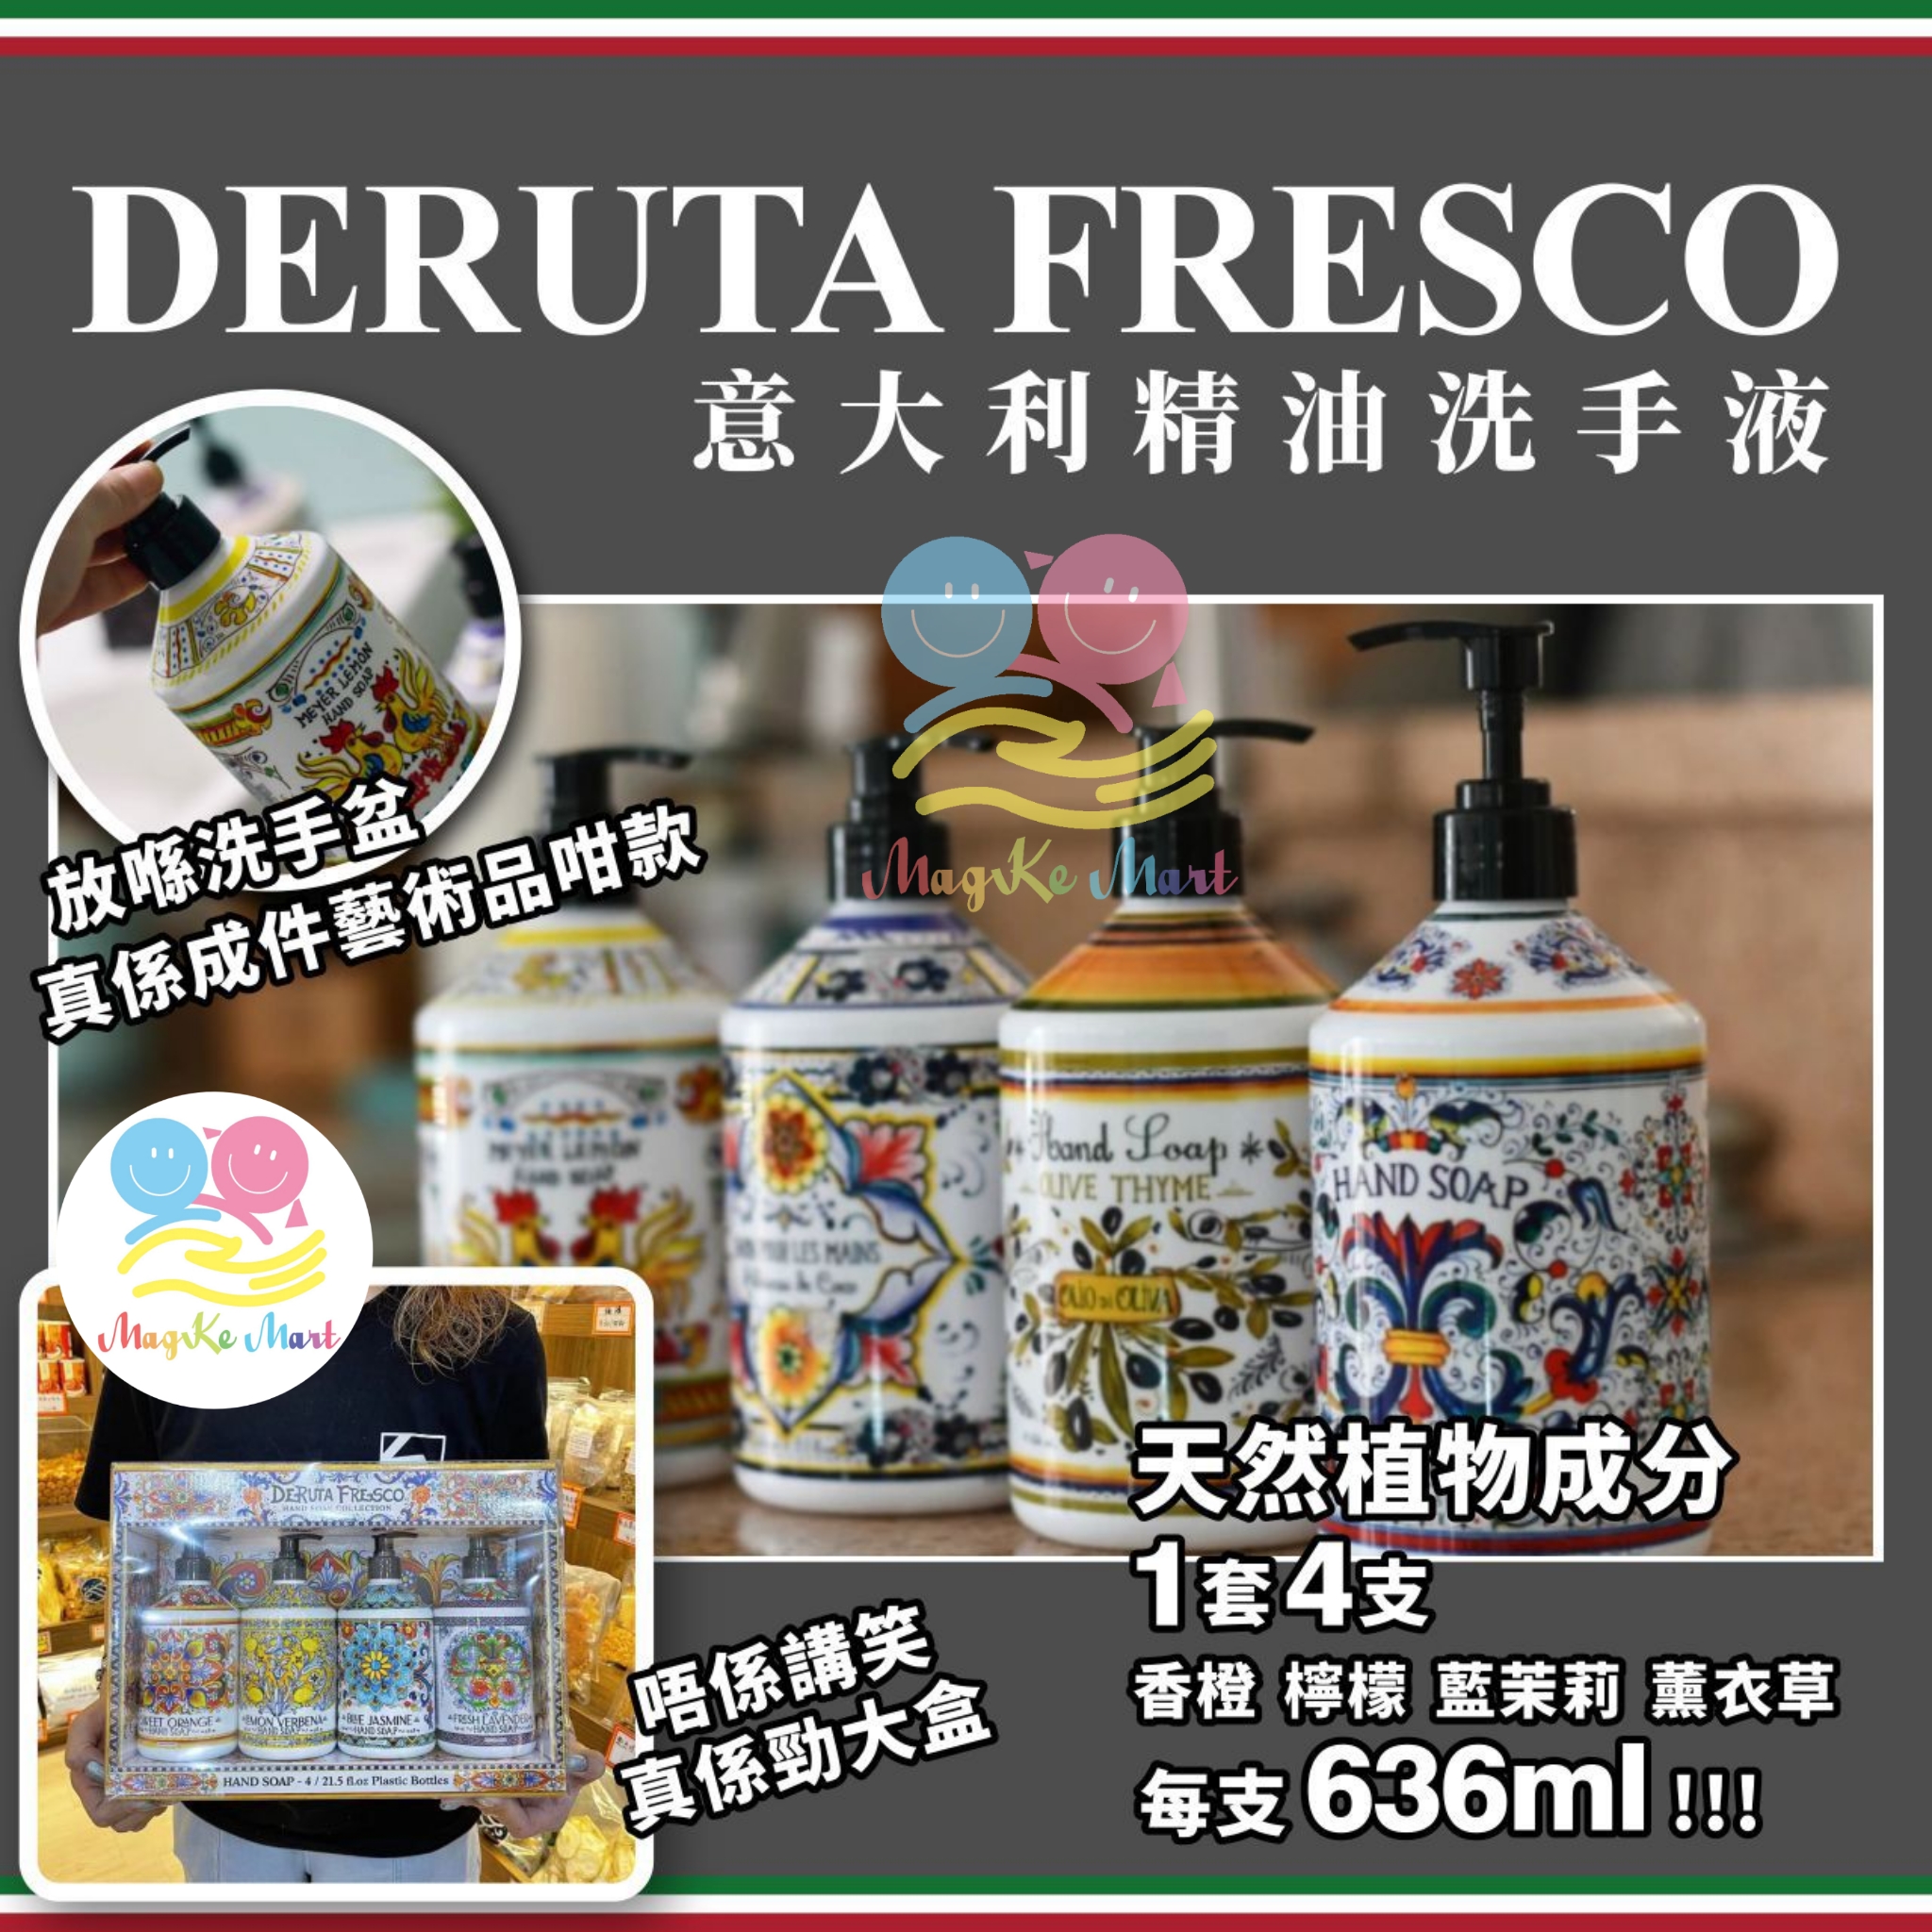 Deruta Fresco 洗手液套裝 636ml (1套4支)